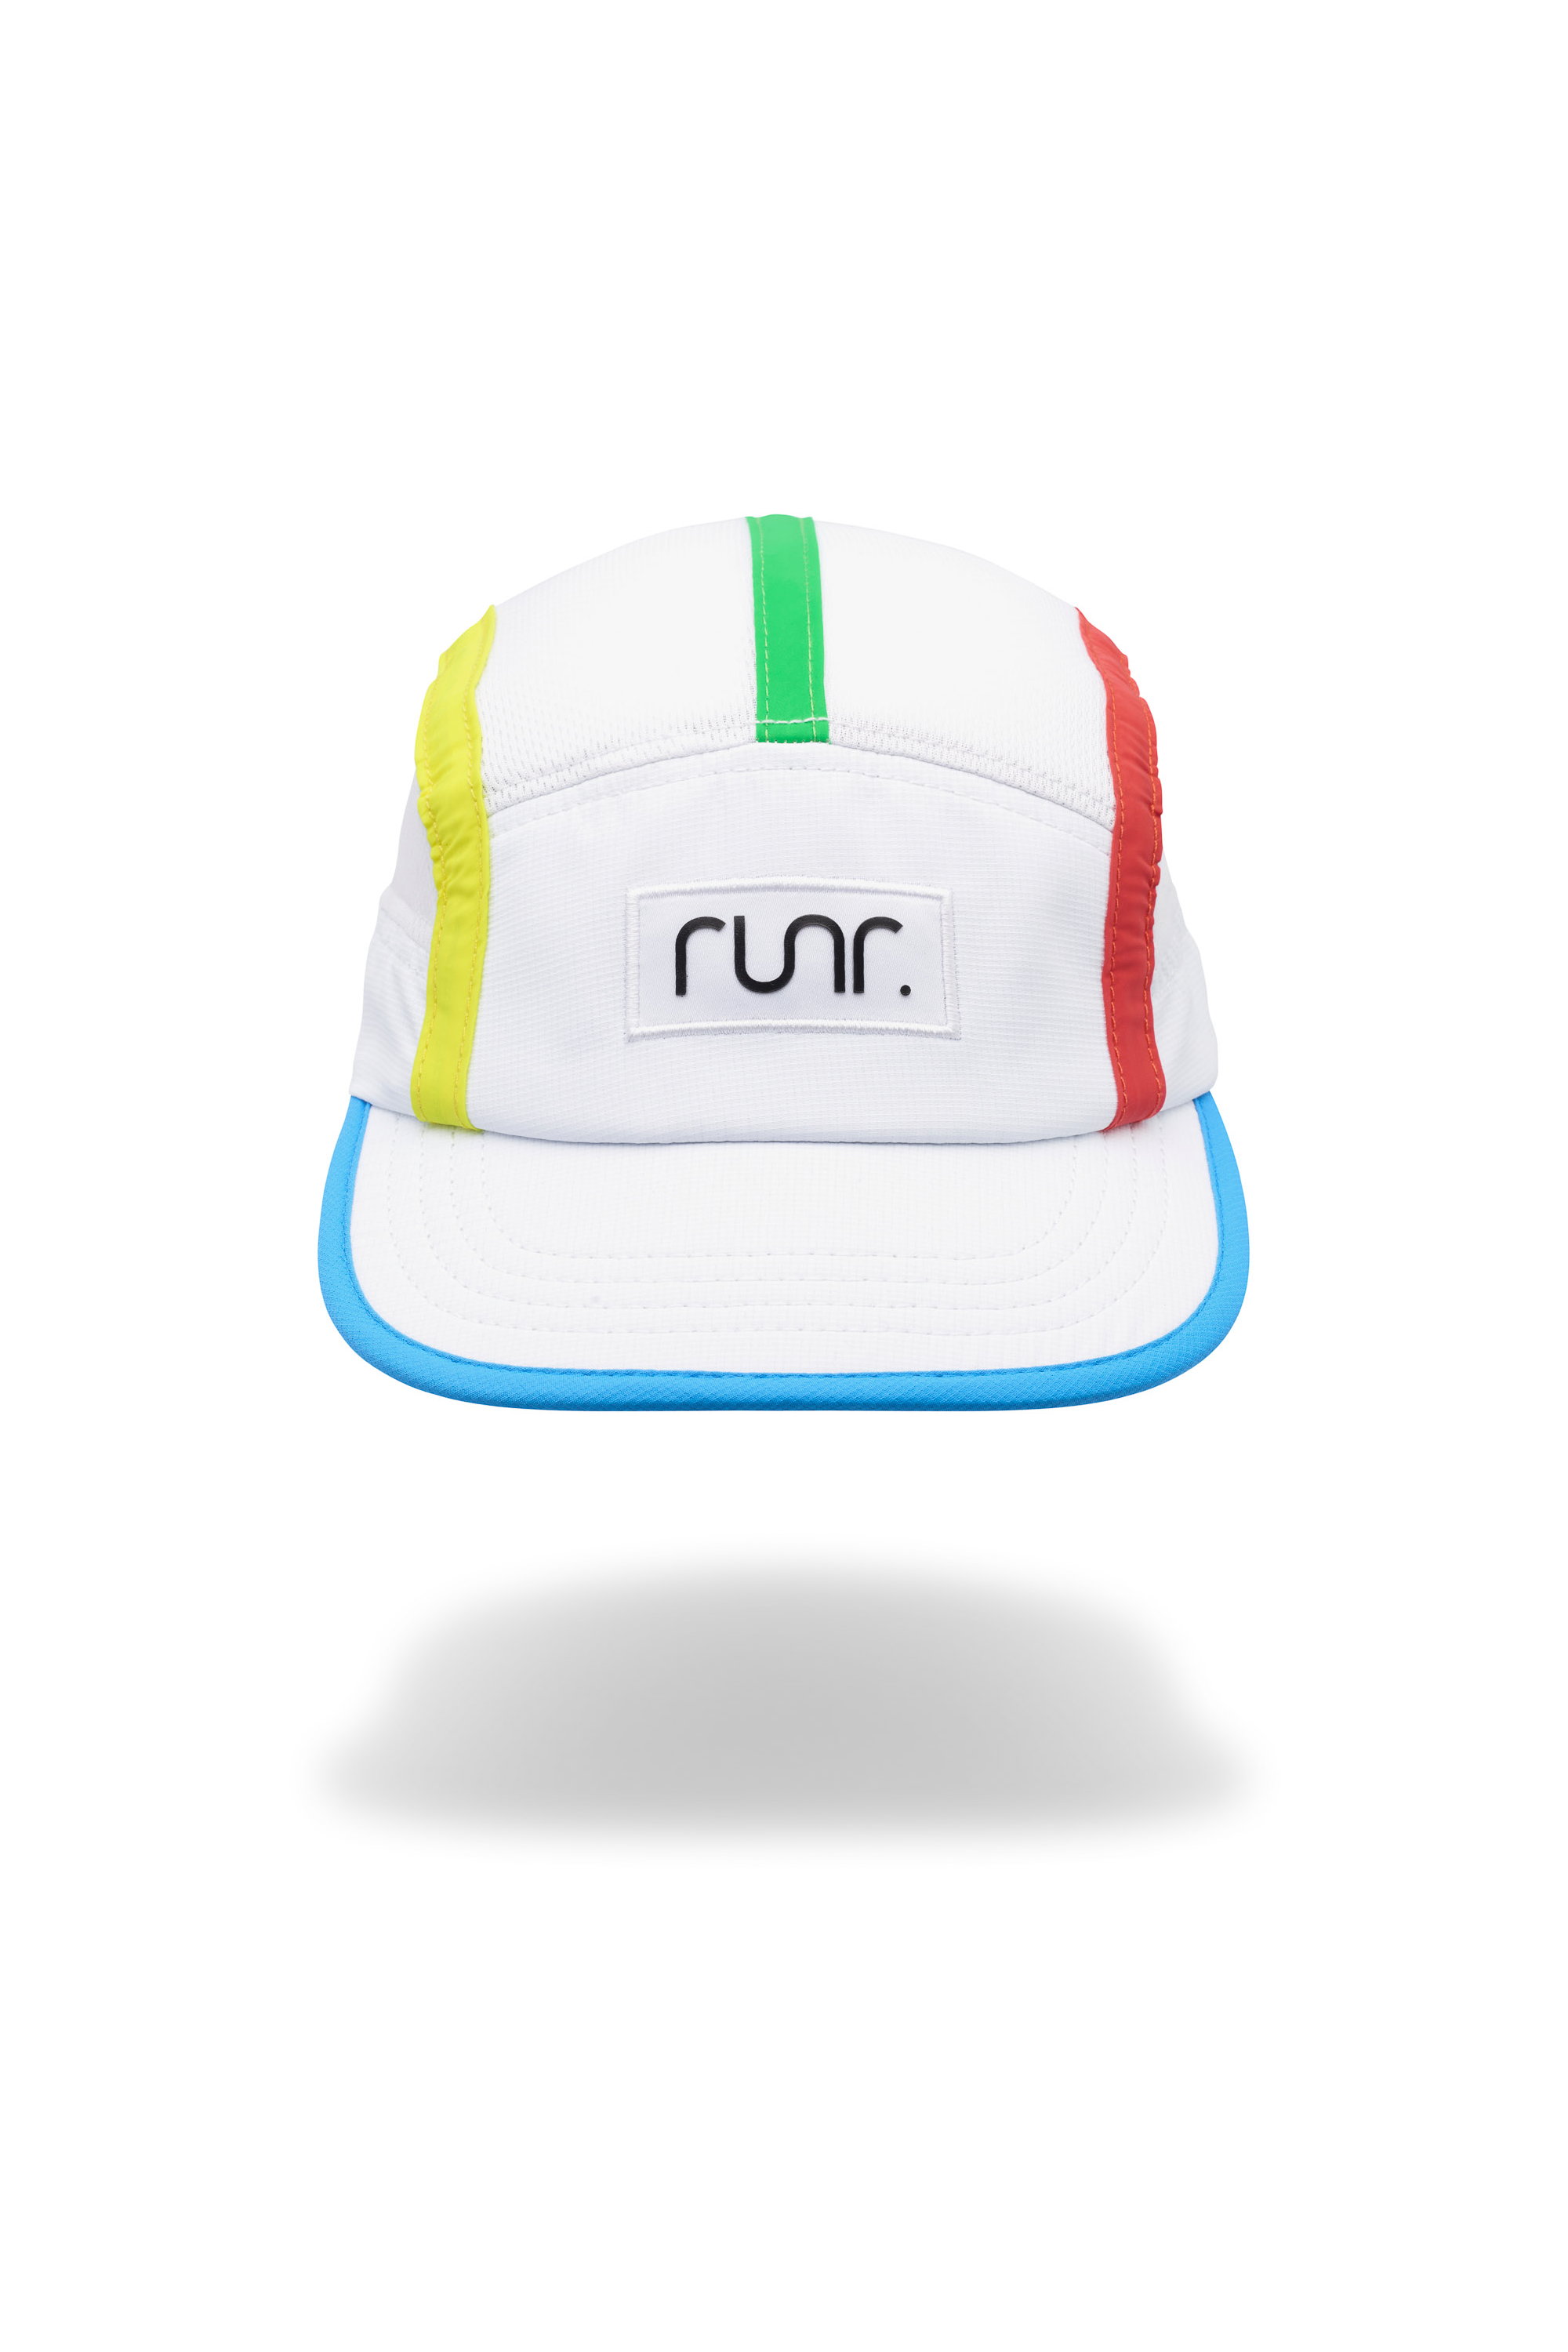 Runr Olympics Technical Running Hat